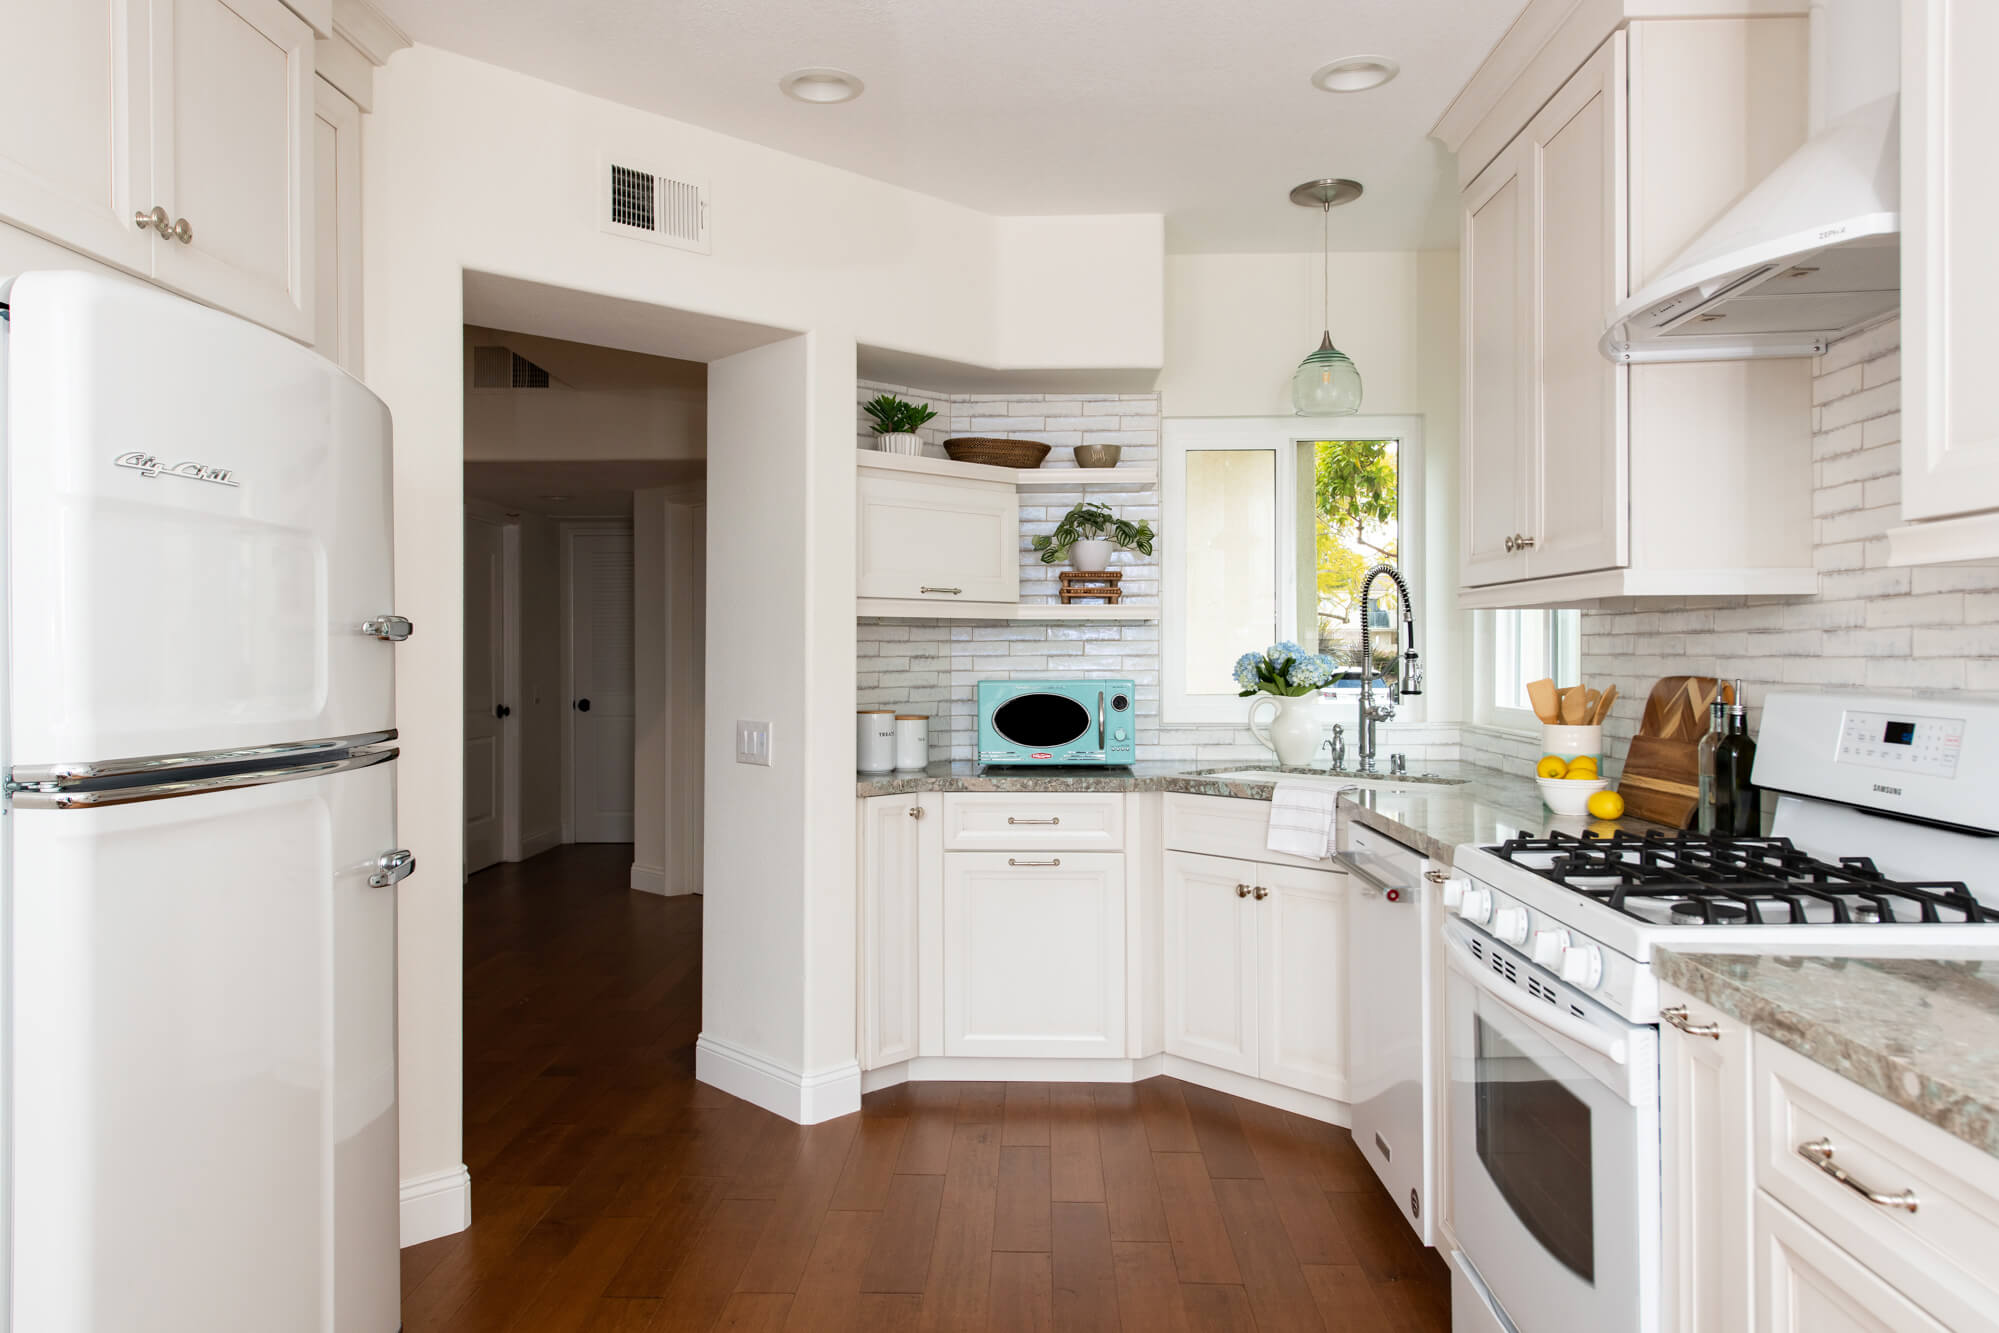 kitchen-remodel-with-antique-inspired-tile-backsplash-and-retro-kitchen-appliances